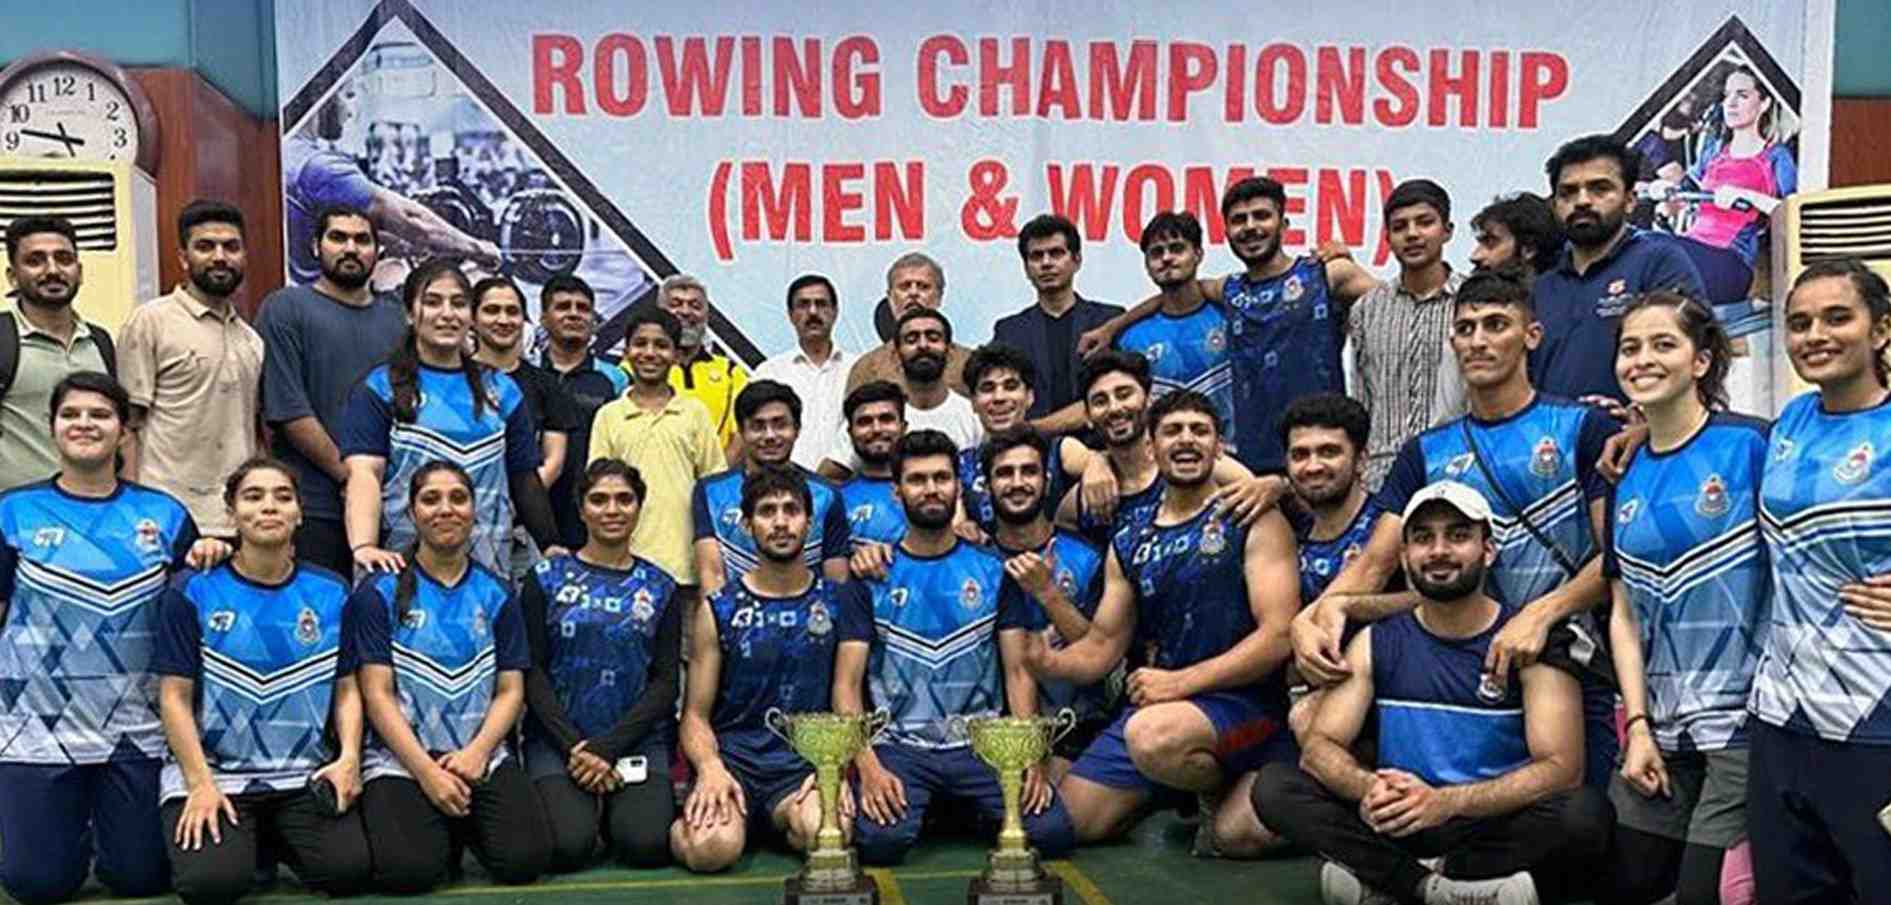 Punjab University athletes win HEC Rowing Championship